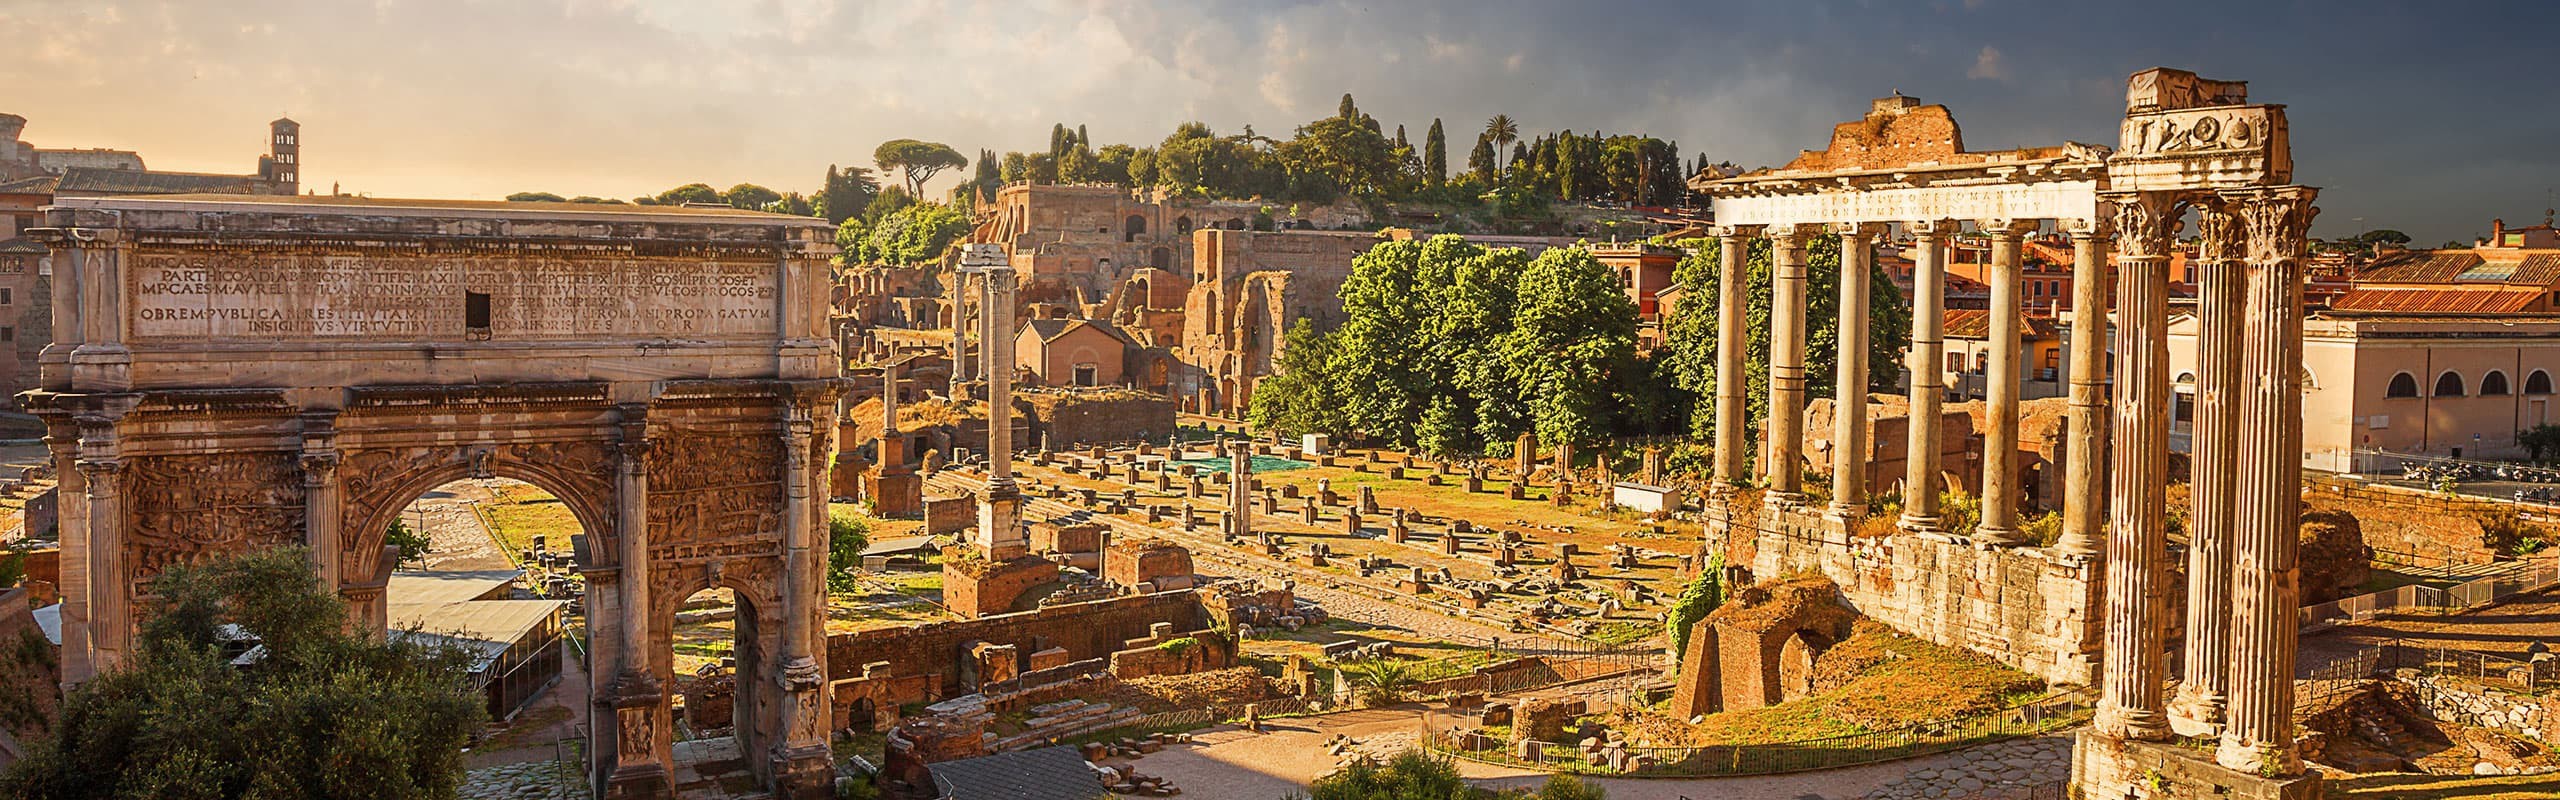 Colosseum-Roman-Forum